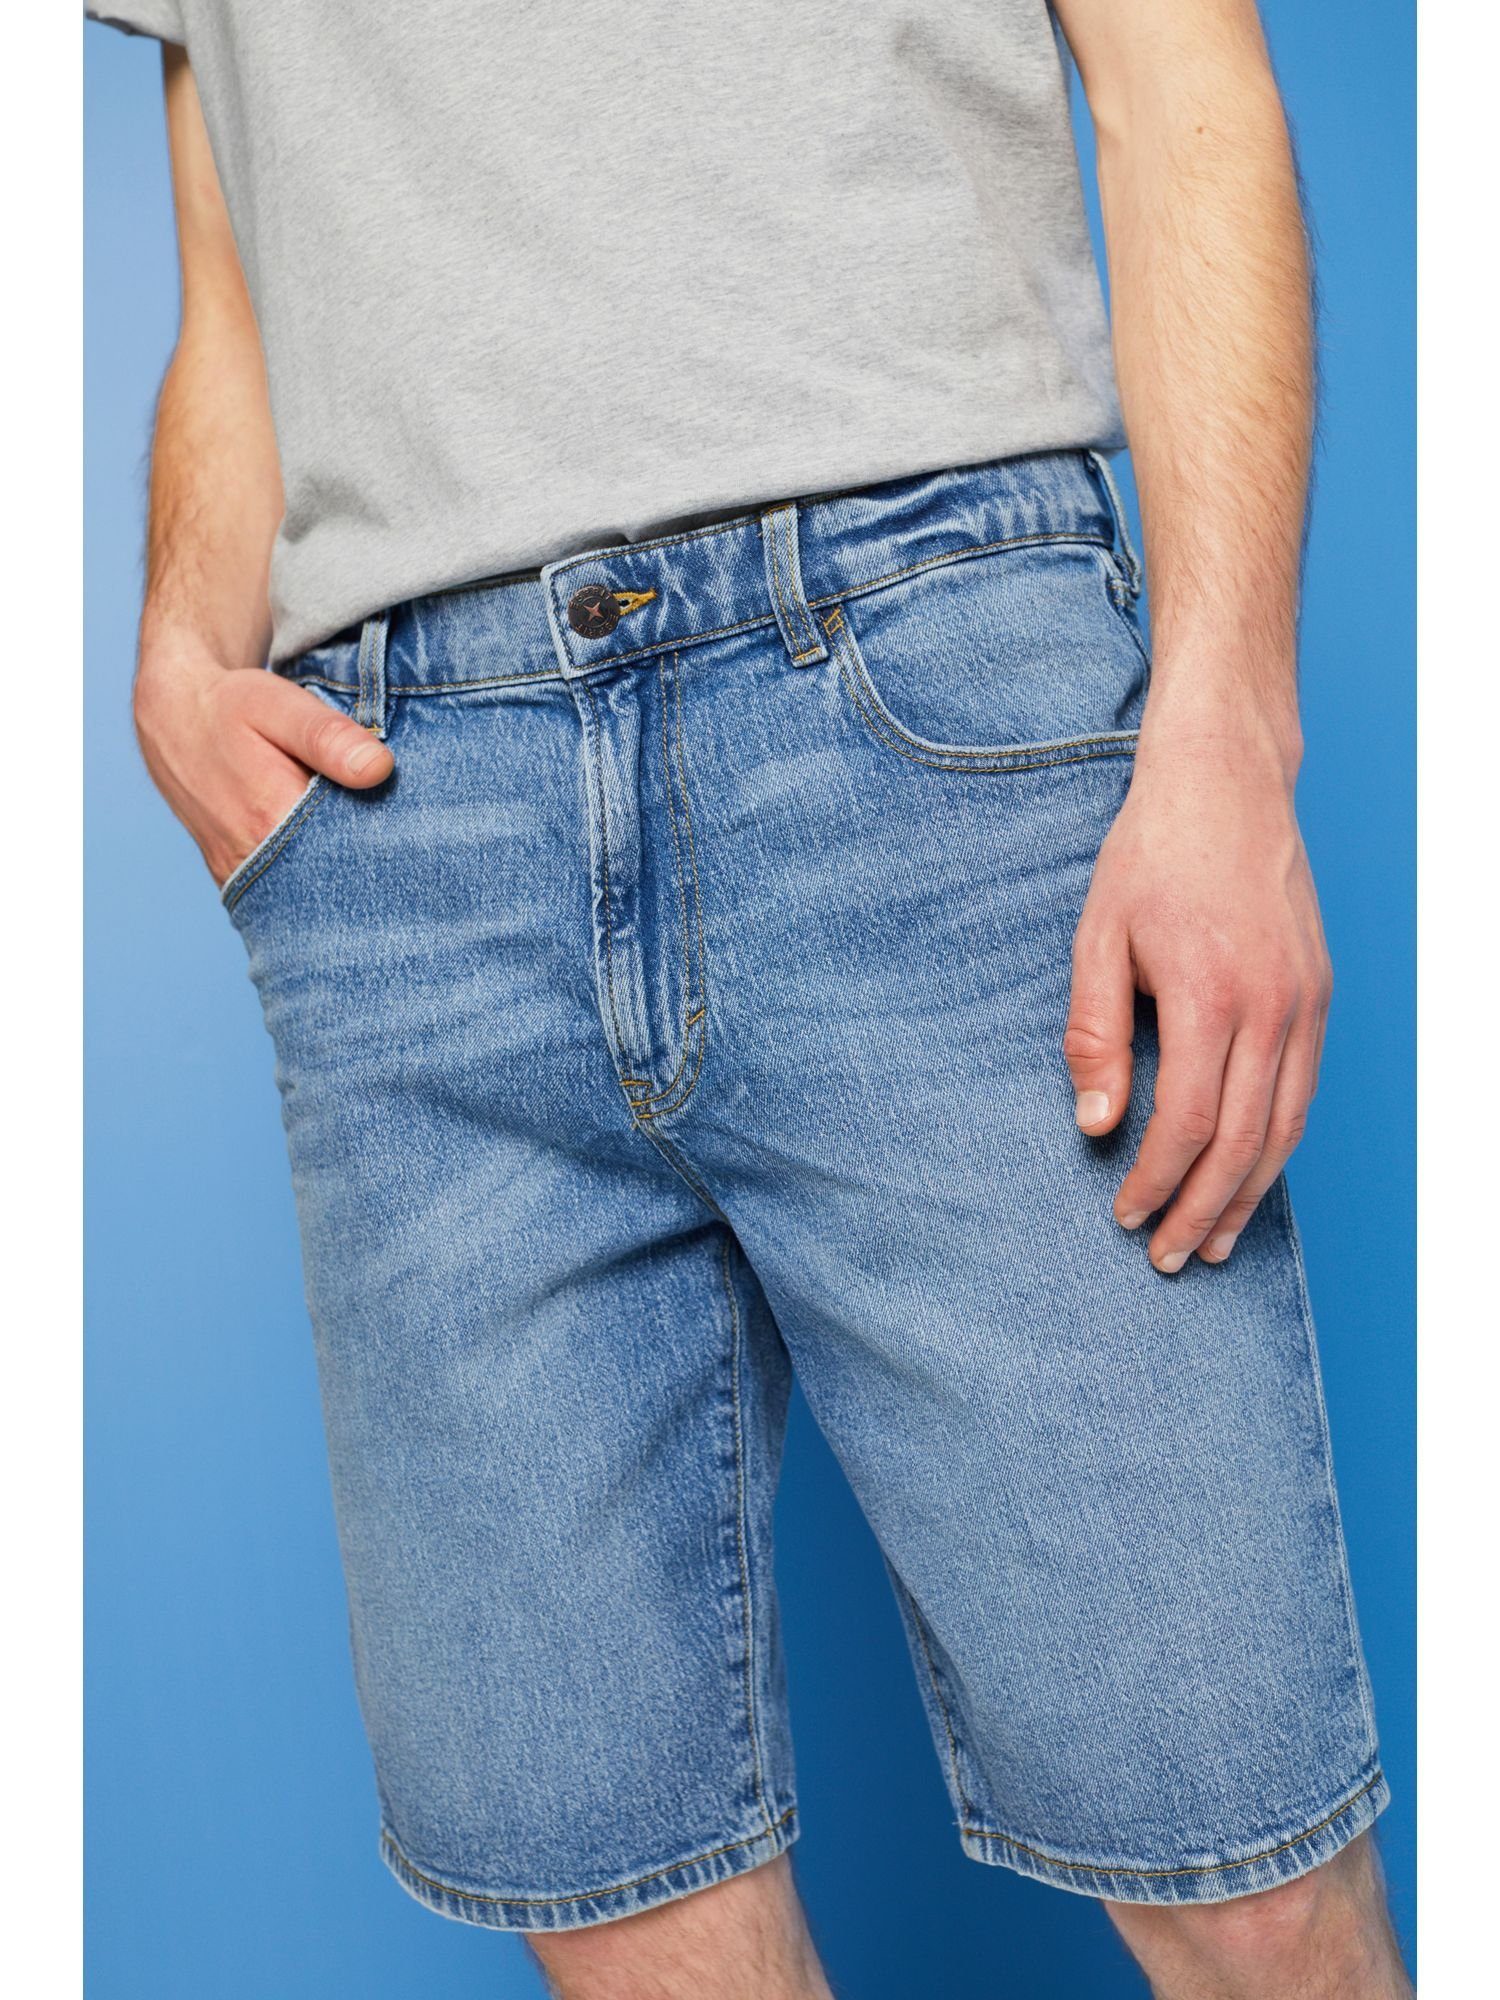 Esprit WASHED Jeansshorts edc by Jeans-Bermudashorts MEDIUM BLUE